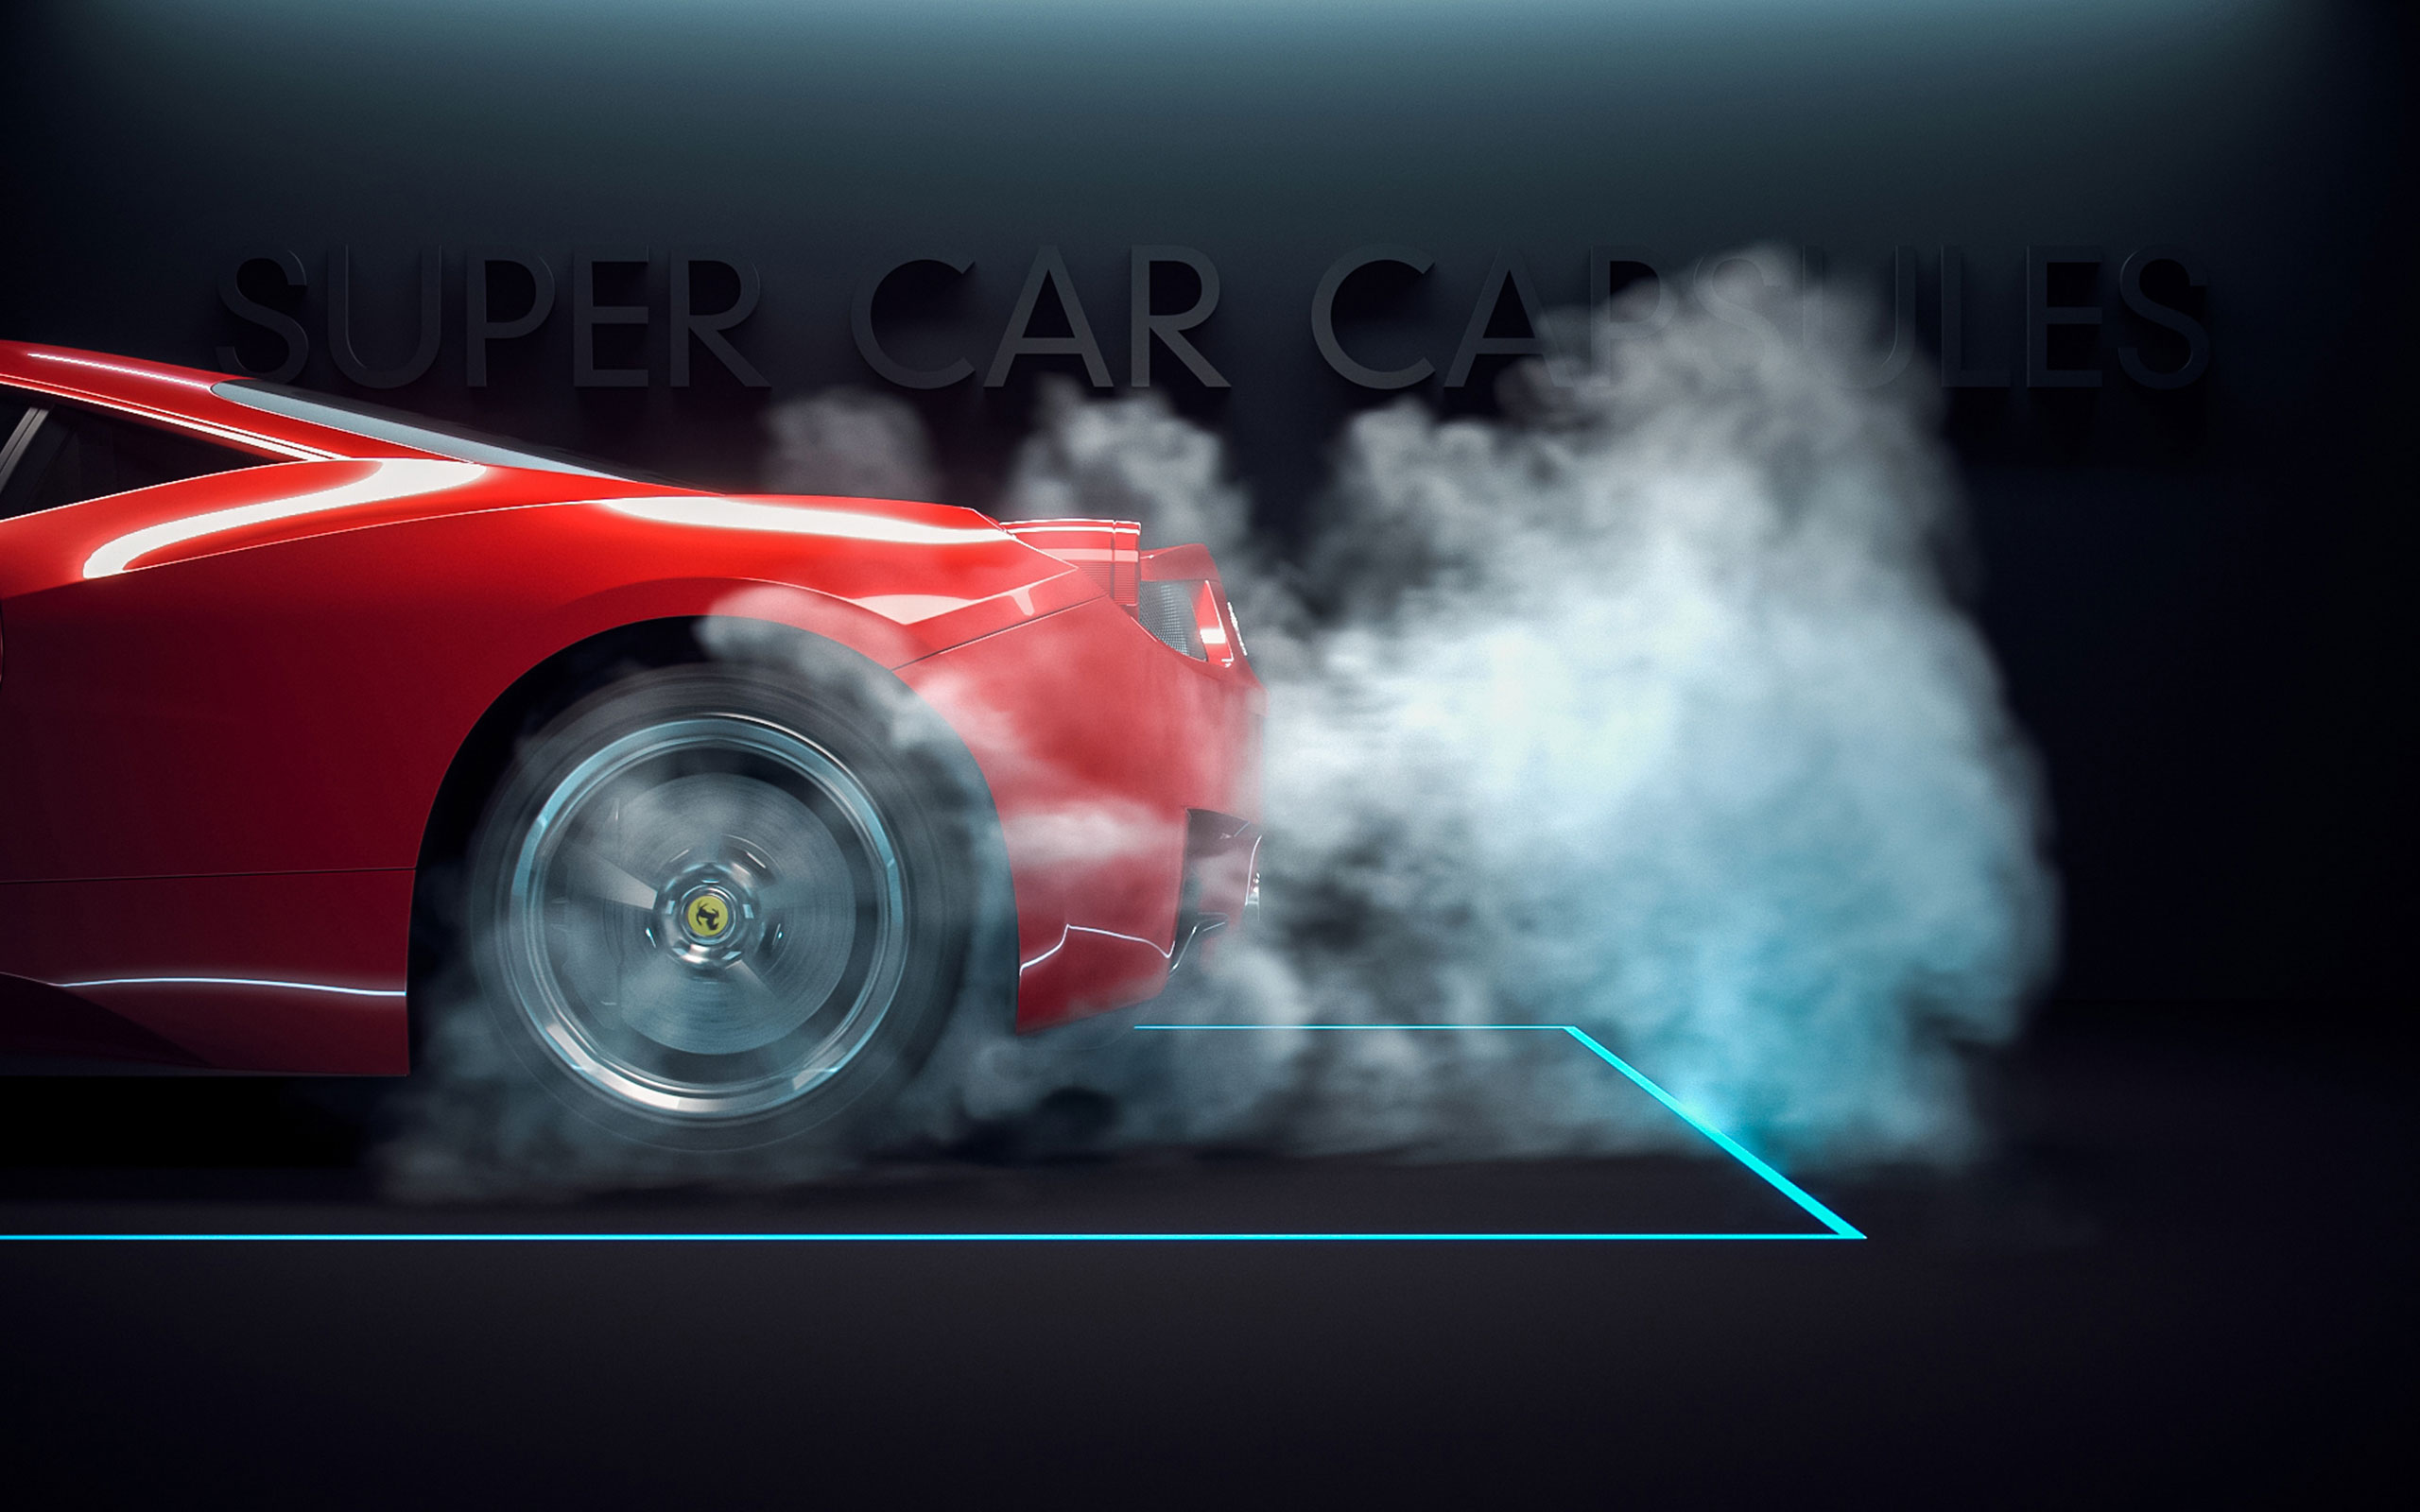 Ferrari 458 burnout in private luxury supercar showroom